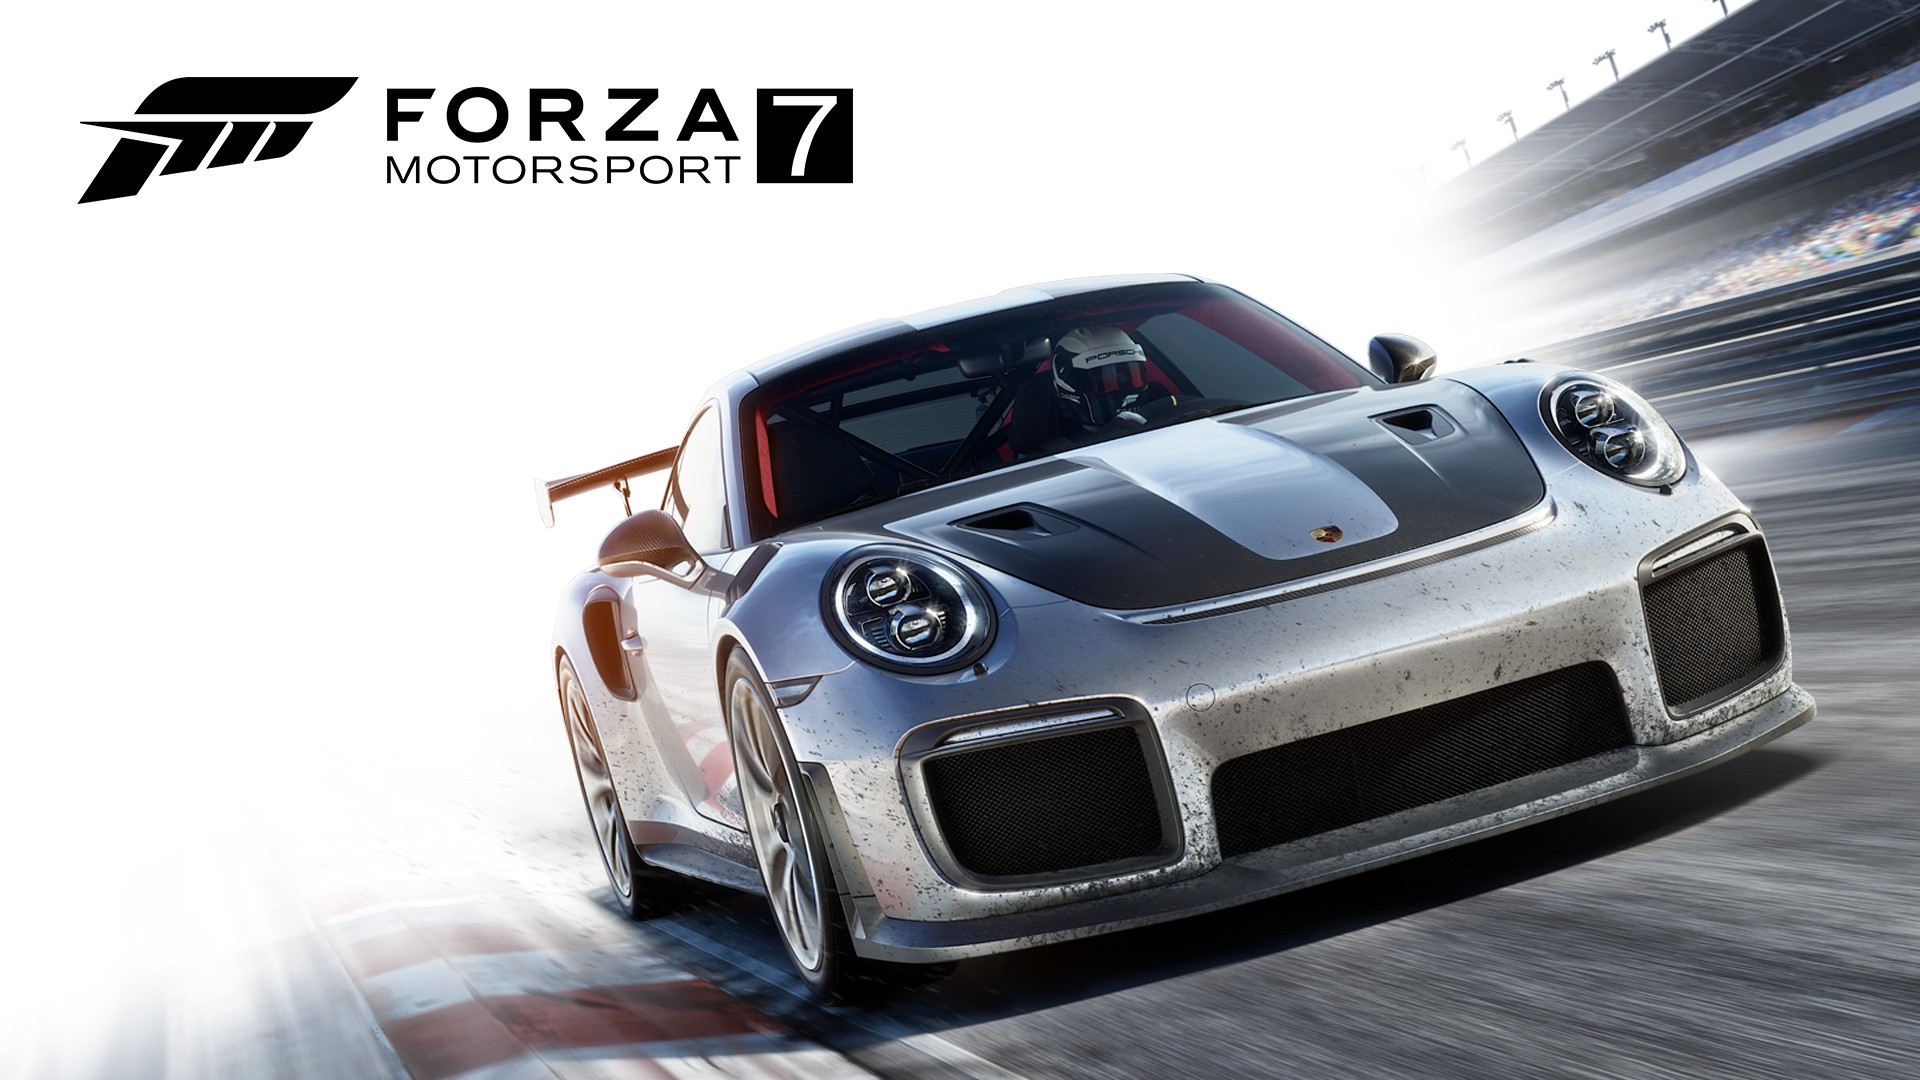 Forza Motorsport 5 - Microsoft Xbox One Game